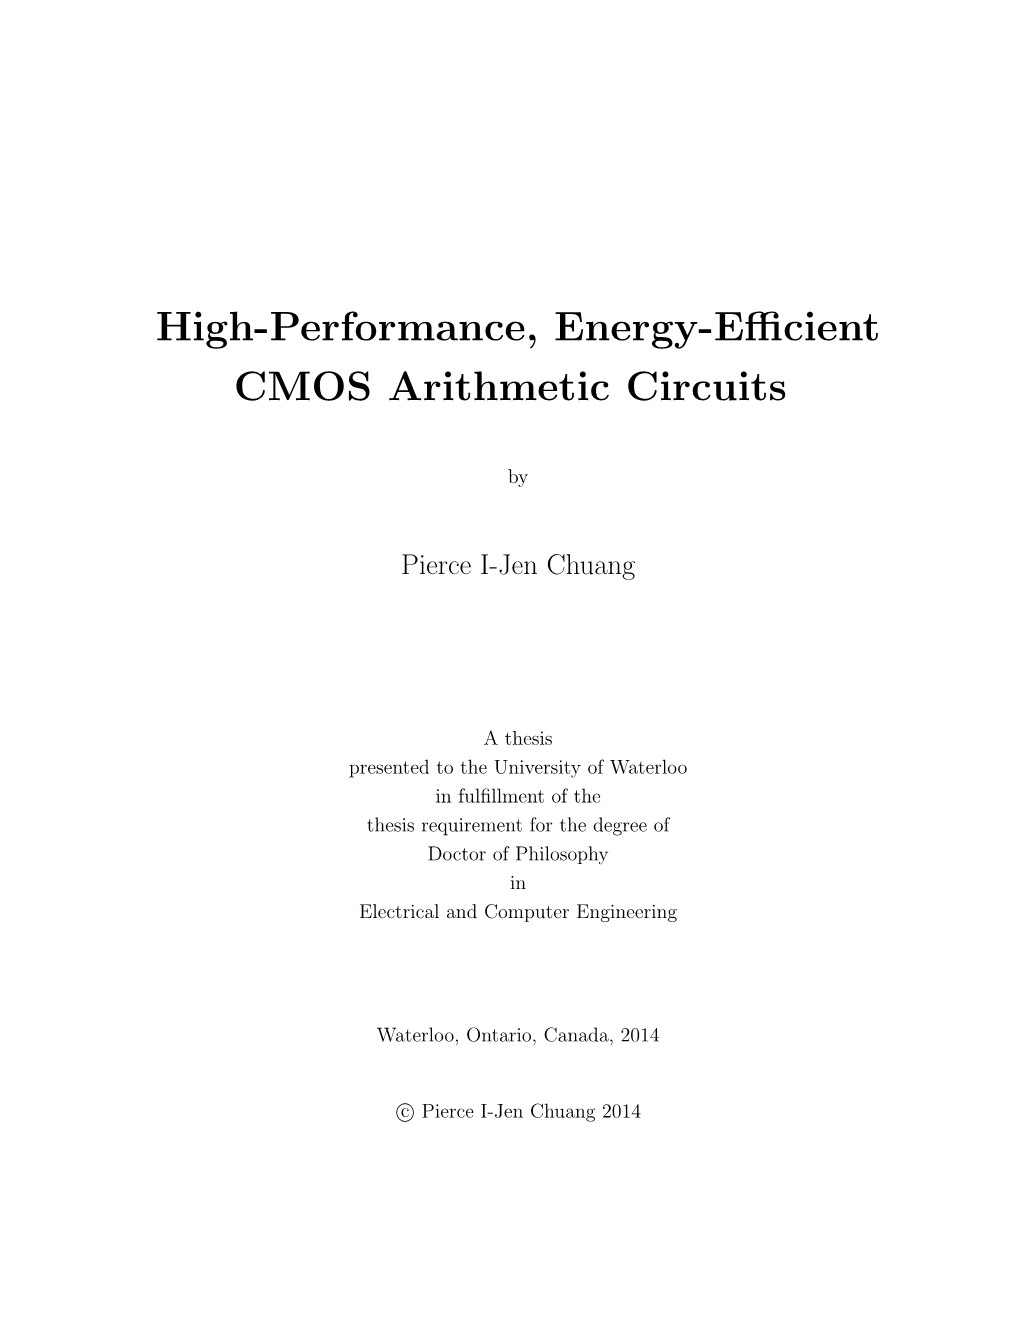 High-Performance, Energy-Efficient CMOS Arithmetic Circuits